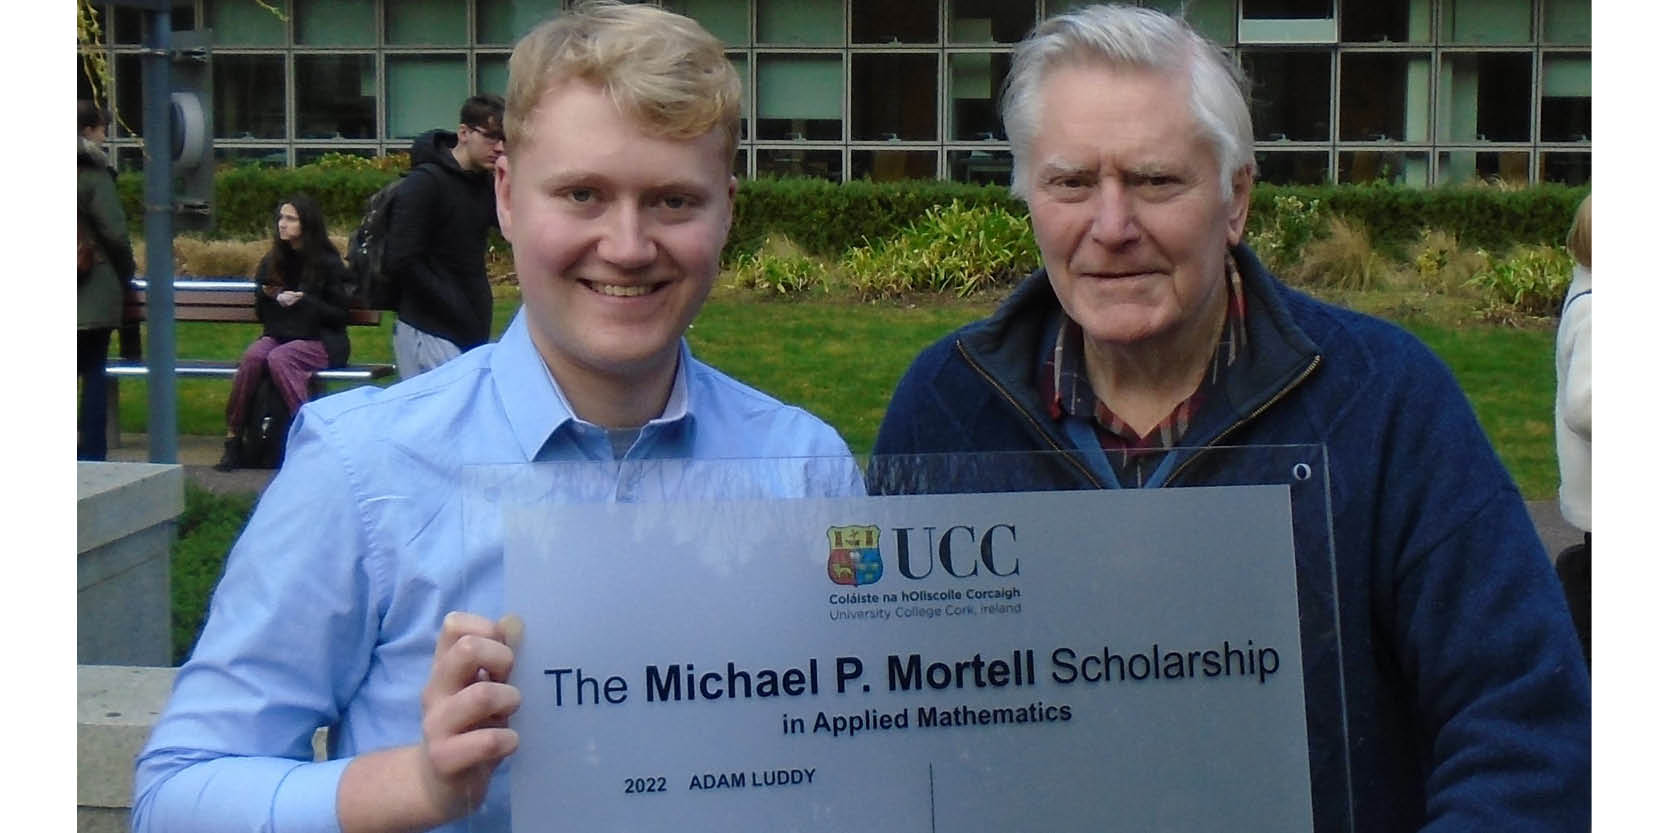  Michael P. Mortell Scholarship in Applied Mathematics